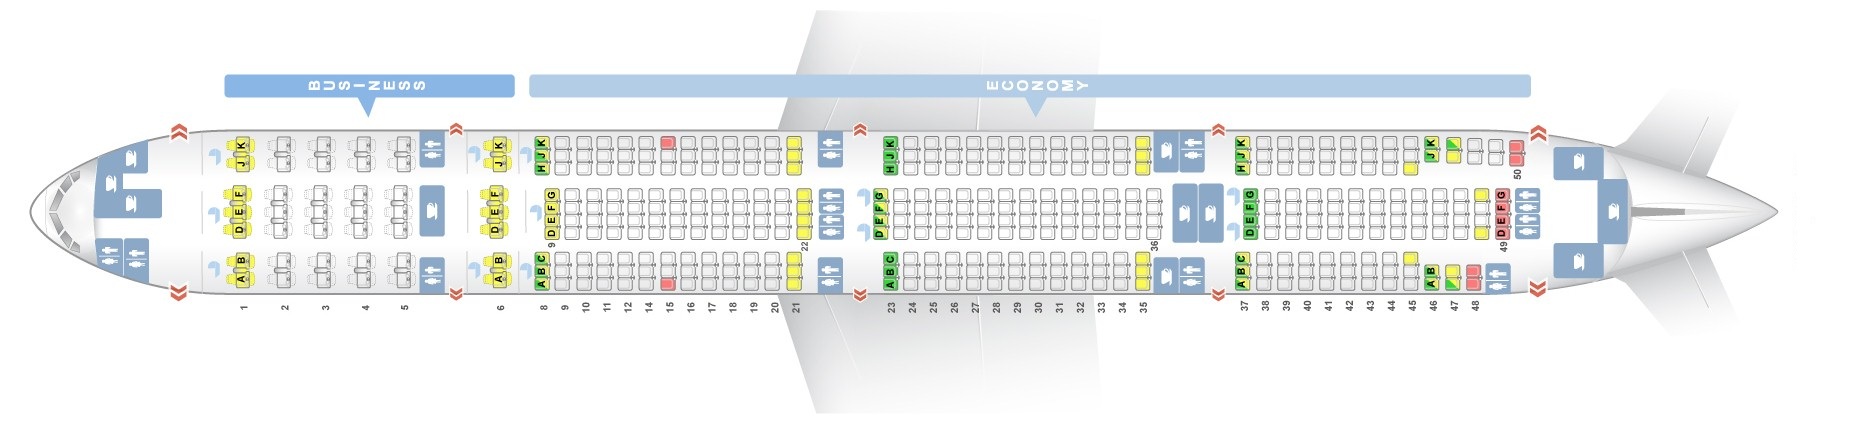 Emirates 777 300er Seating Chart